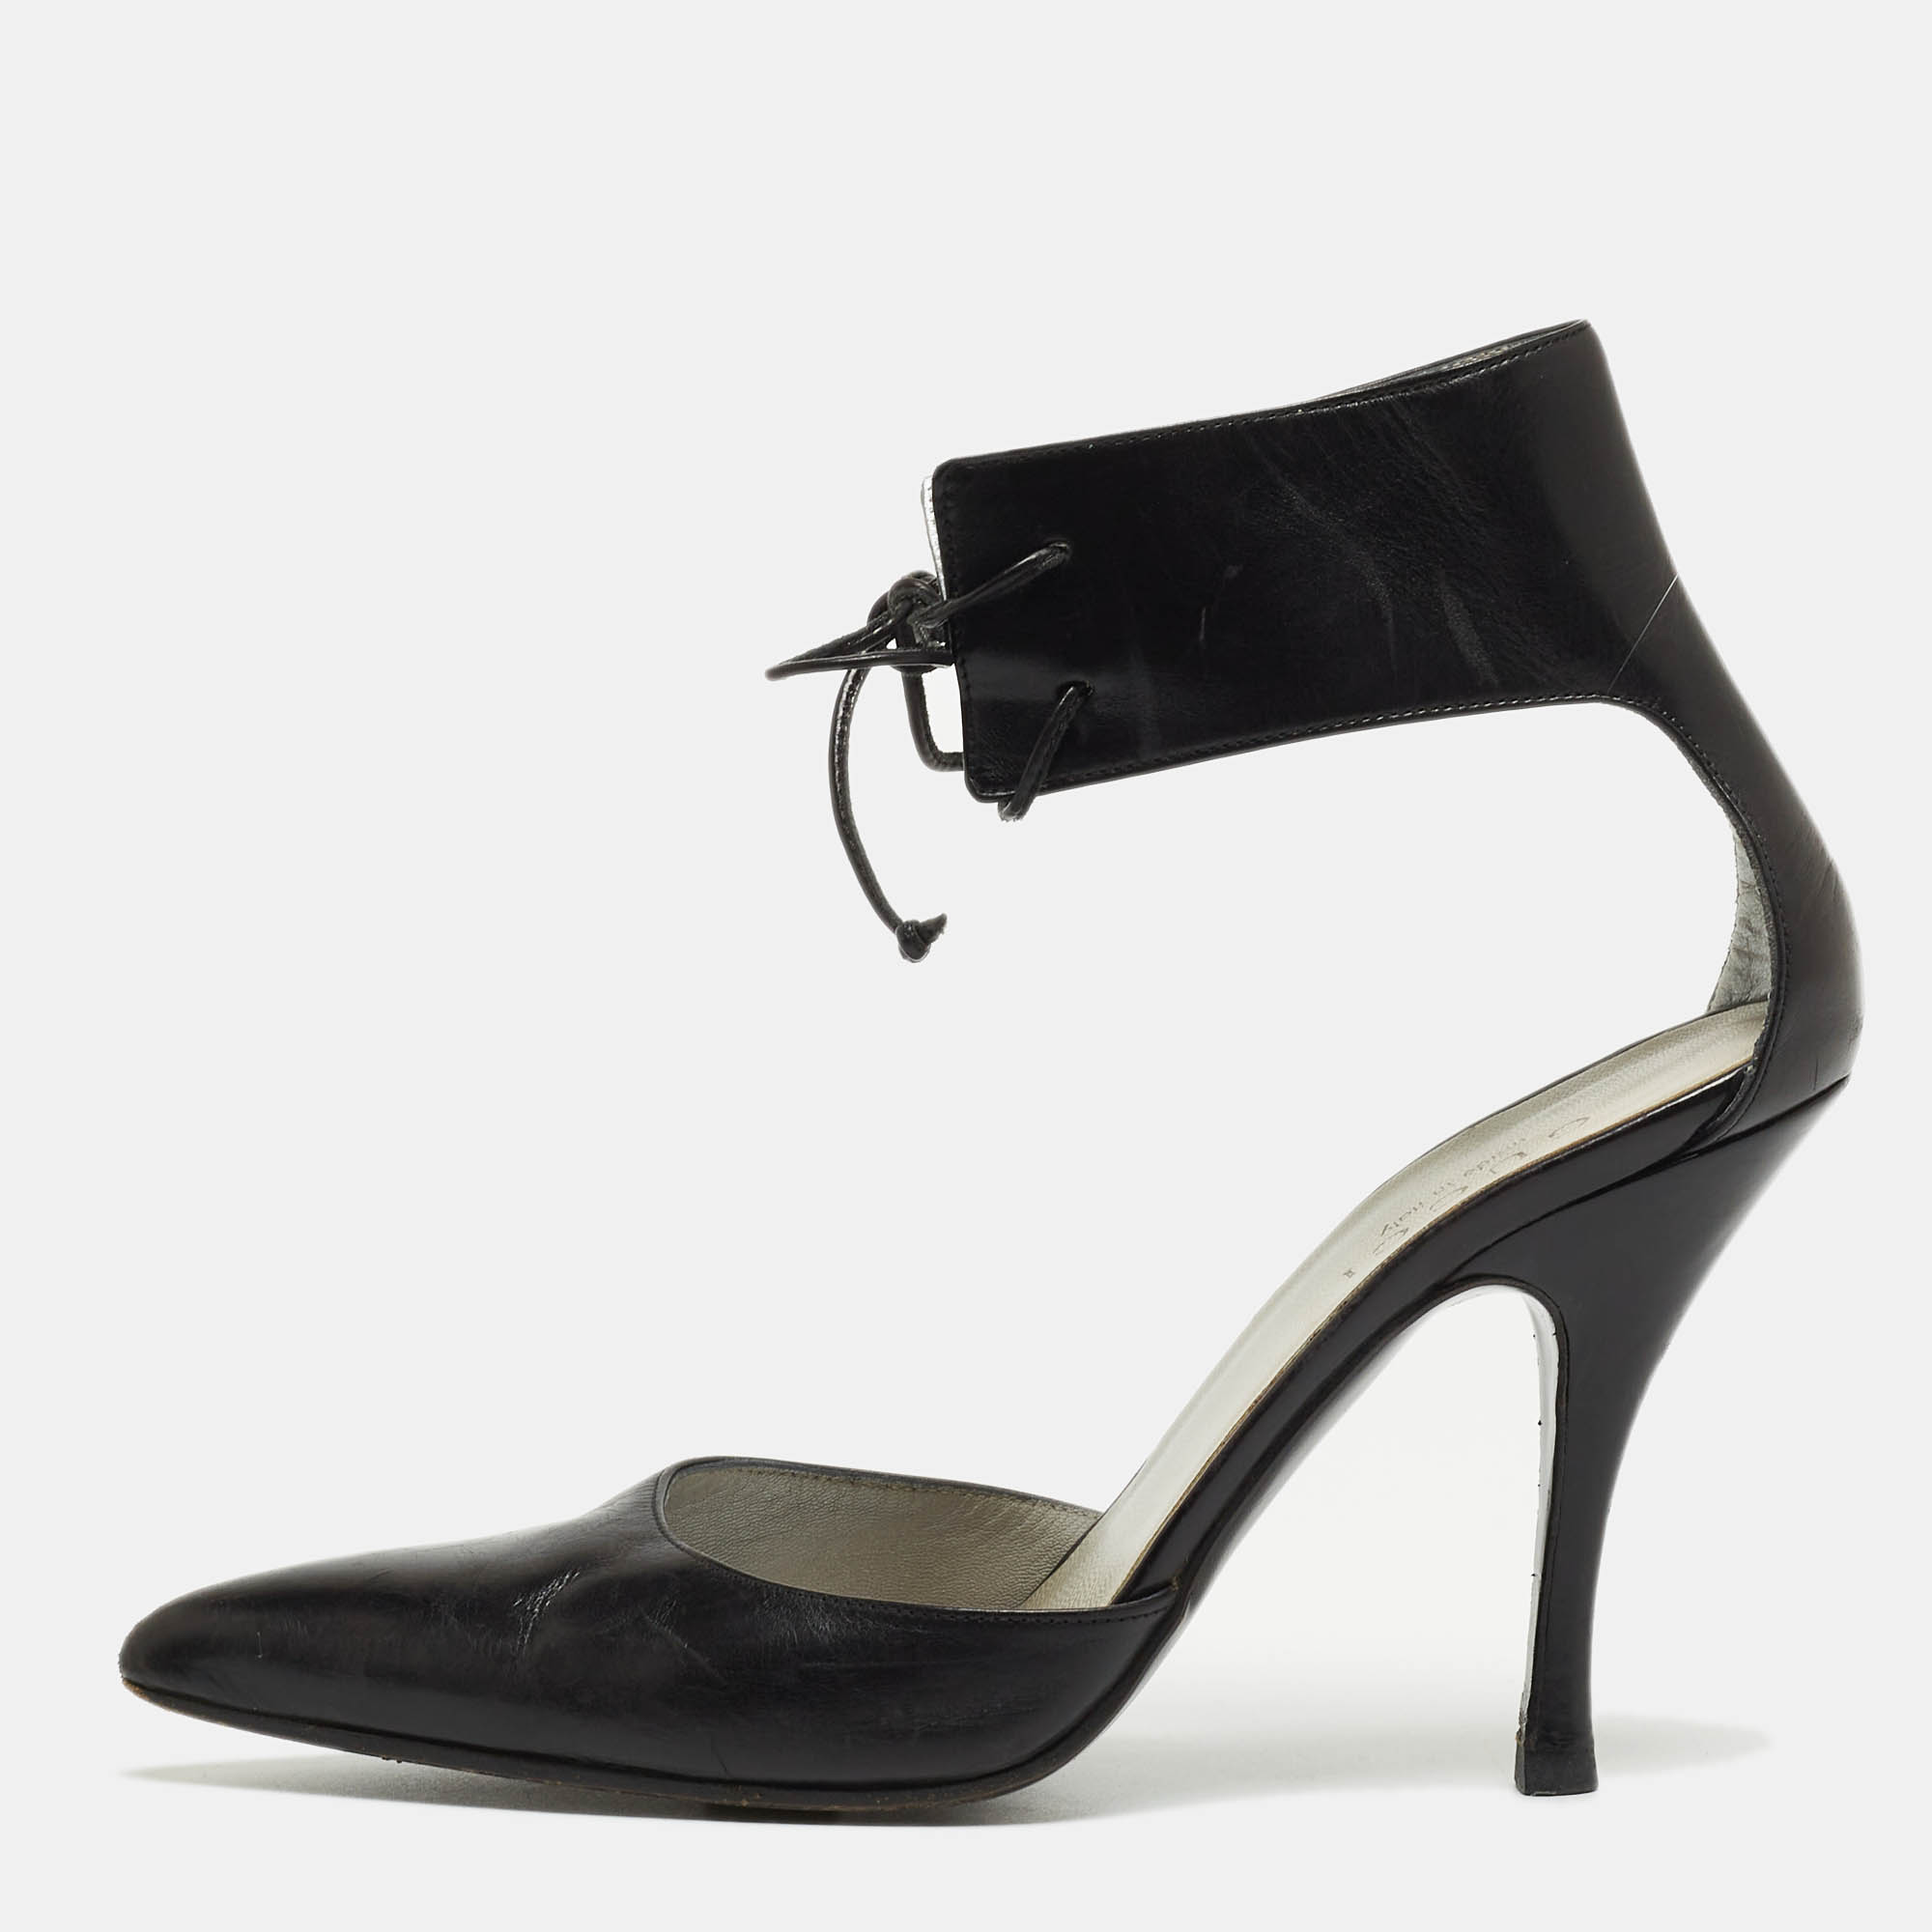 Gucci black leather ankle tie pumps size 37.5